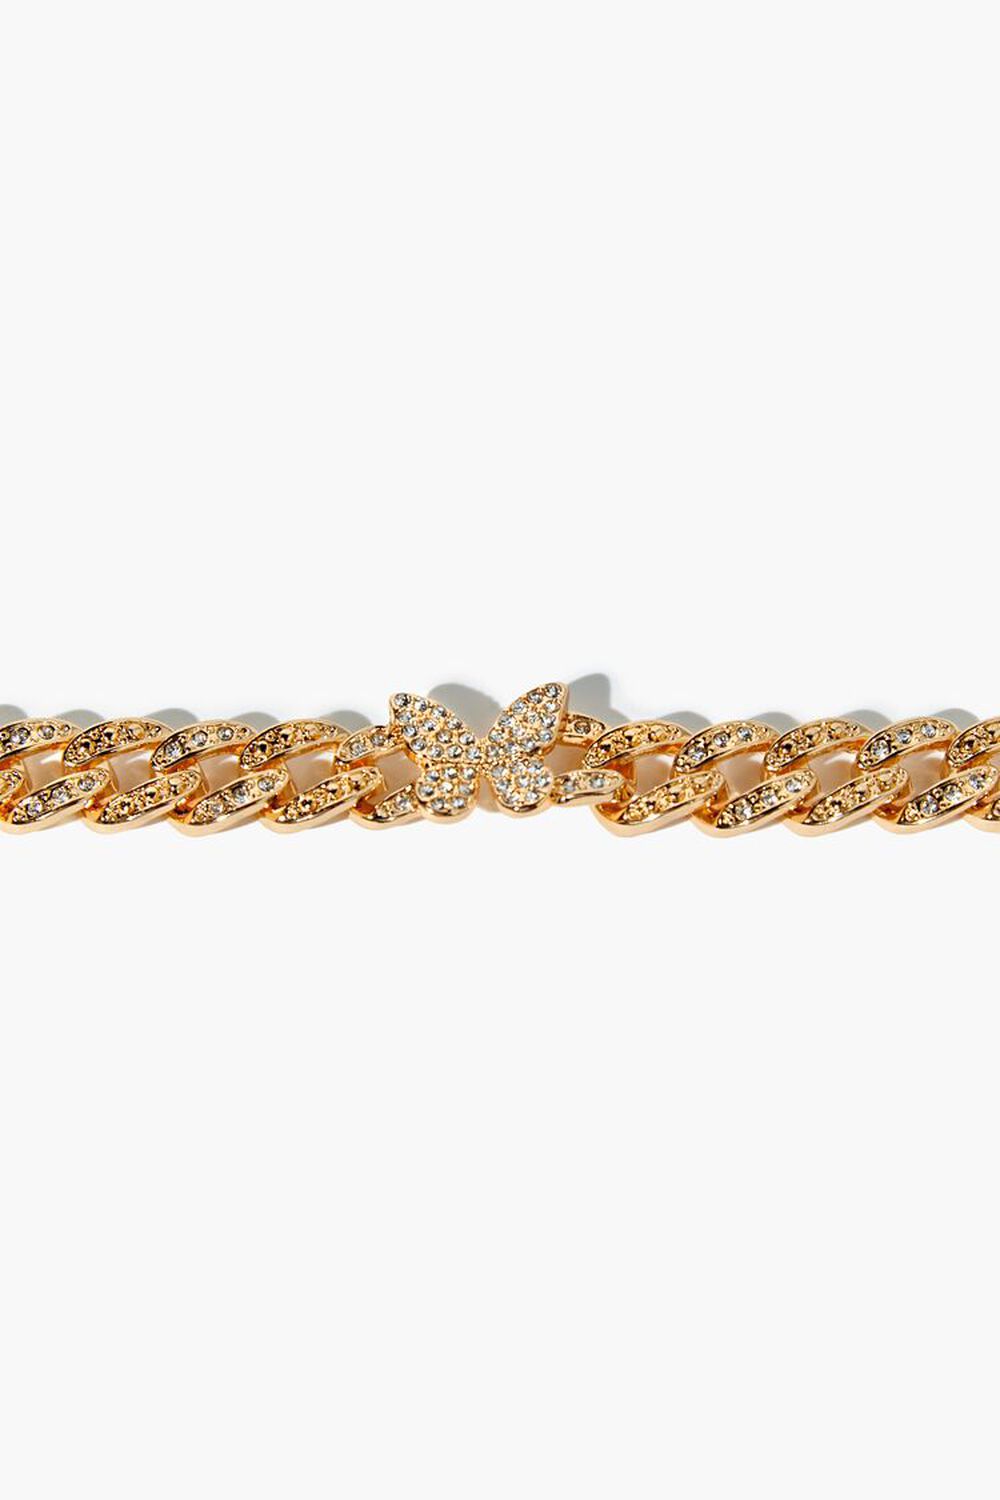 GOLD/CLEAR Rhinestone Butterfly Chain Bracelet, image 3